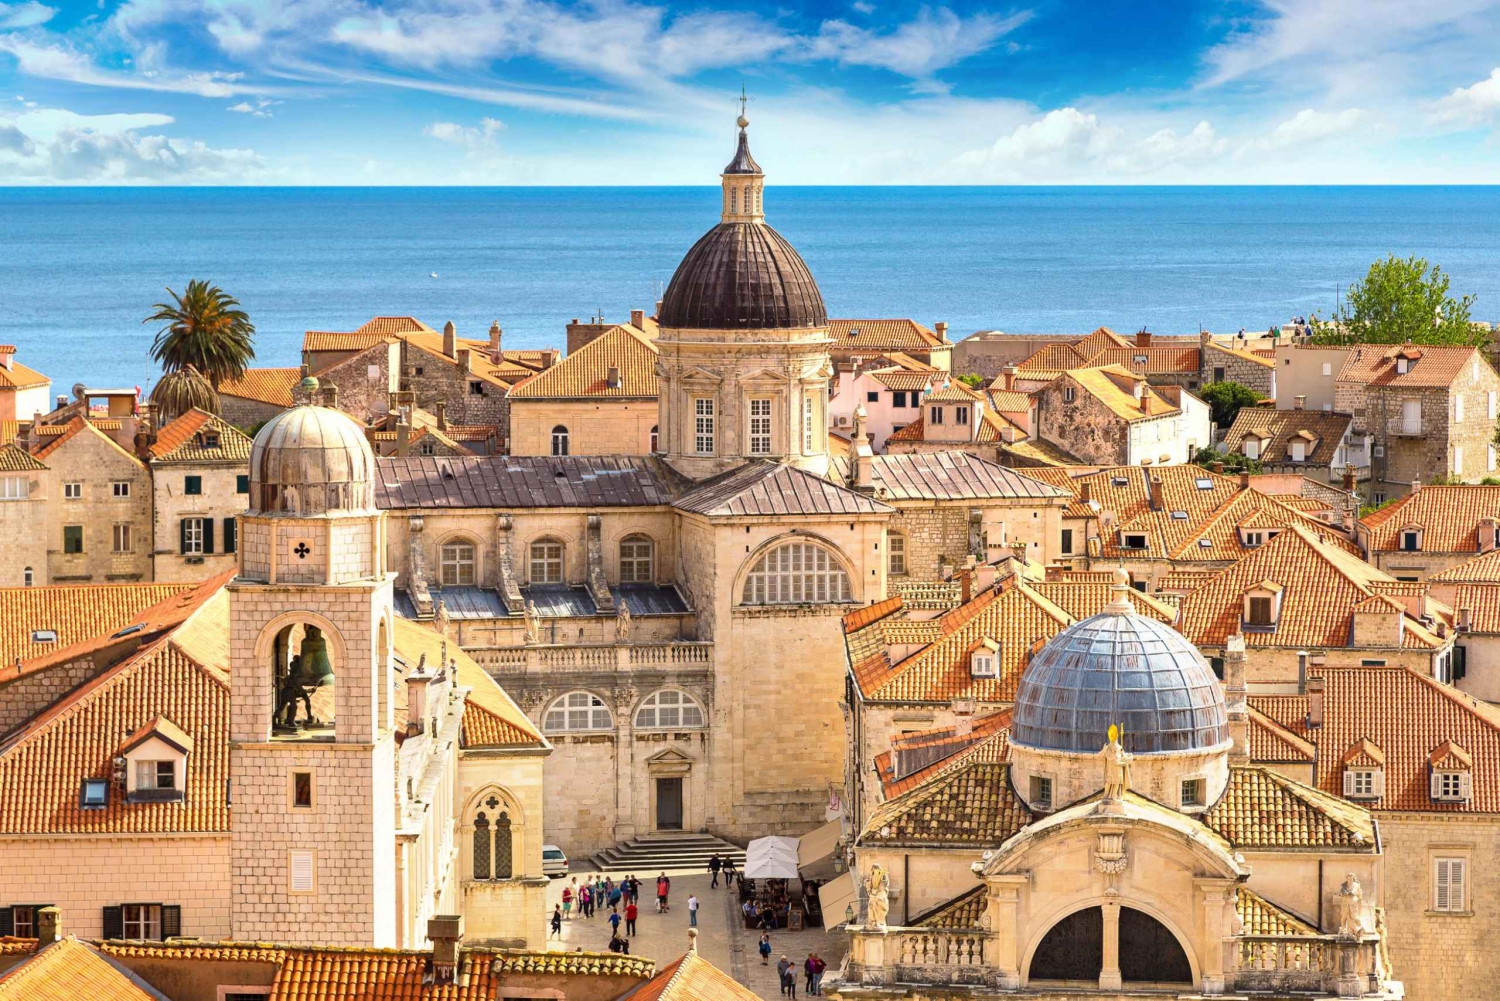 De Makarska: visite d'une journée à Dubrovnik